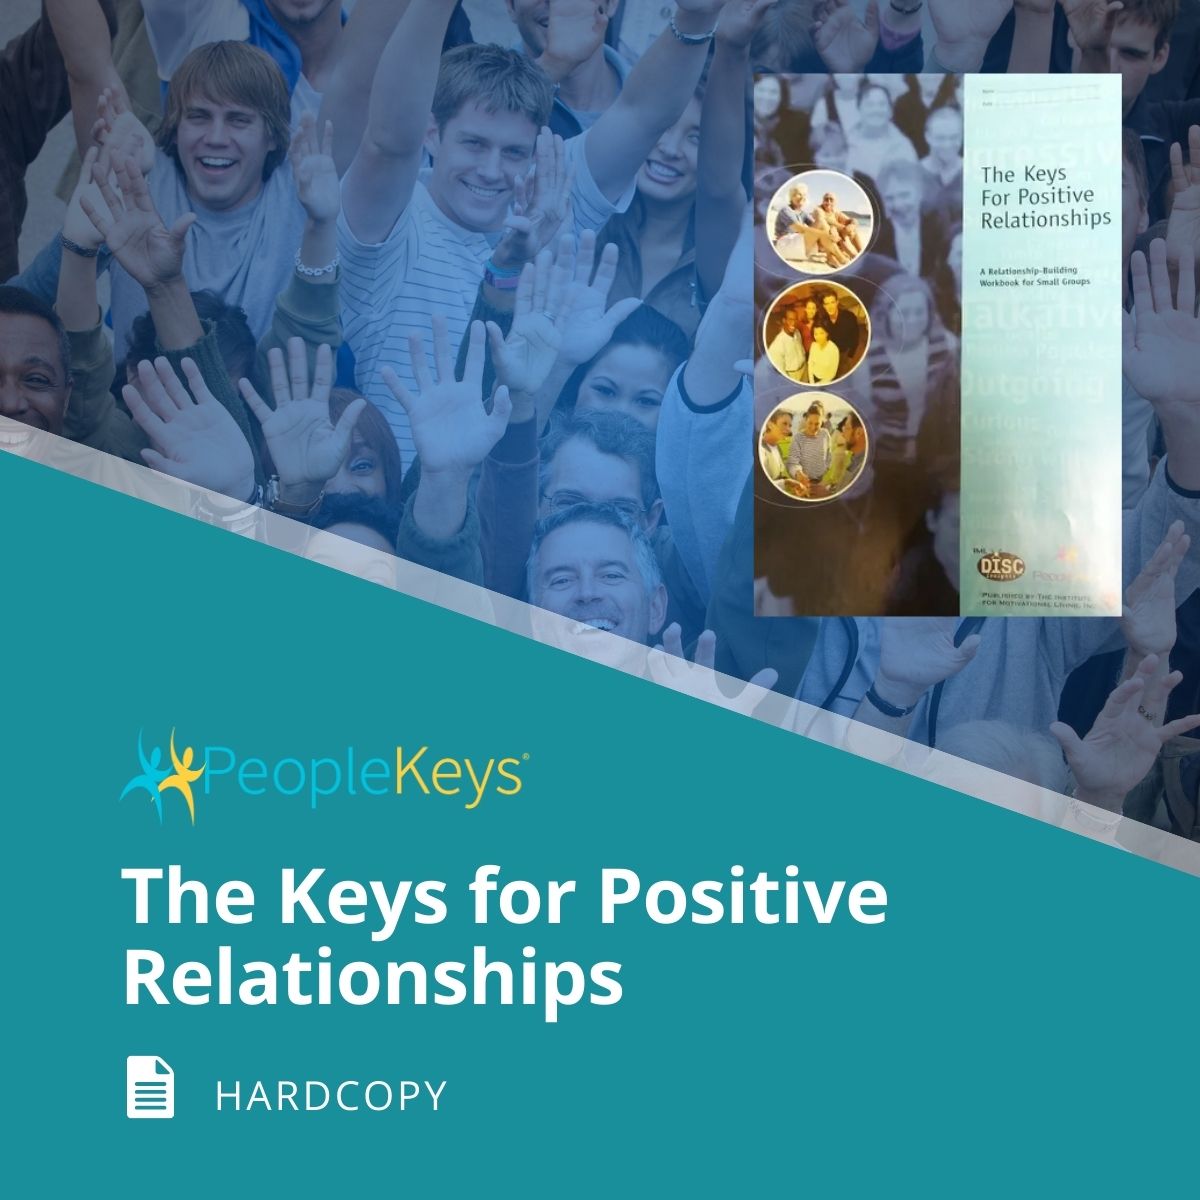 The Keys for Positive Relationships (Hardcopy)